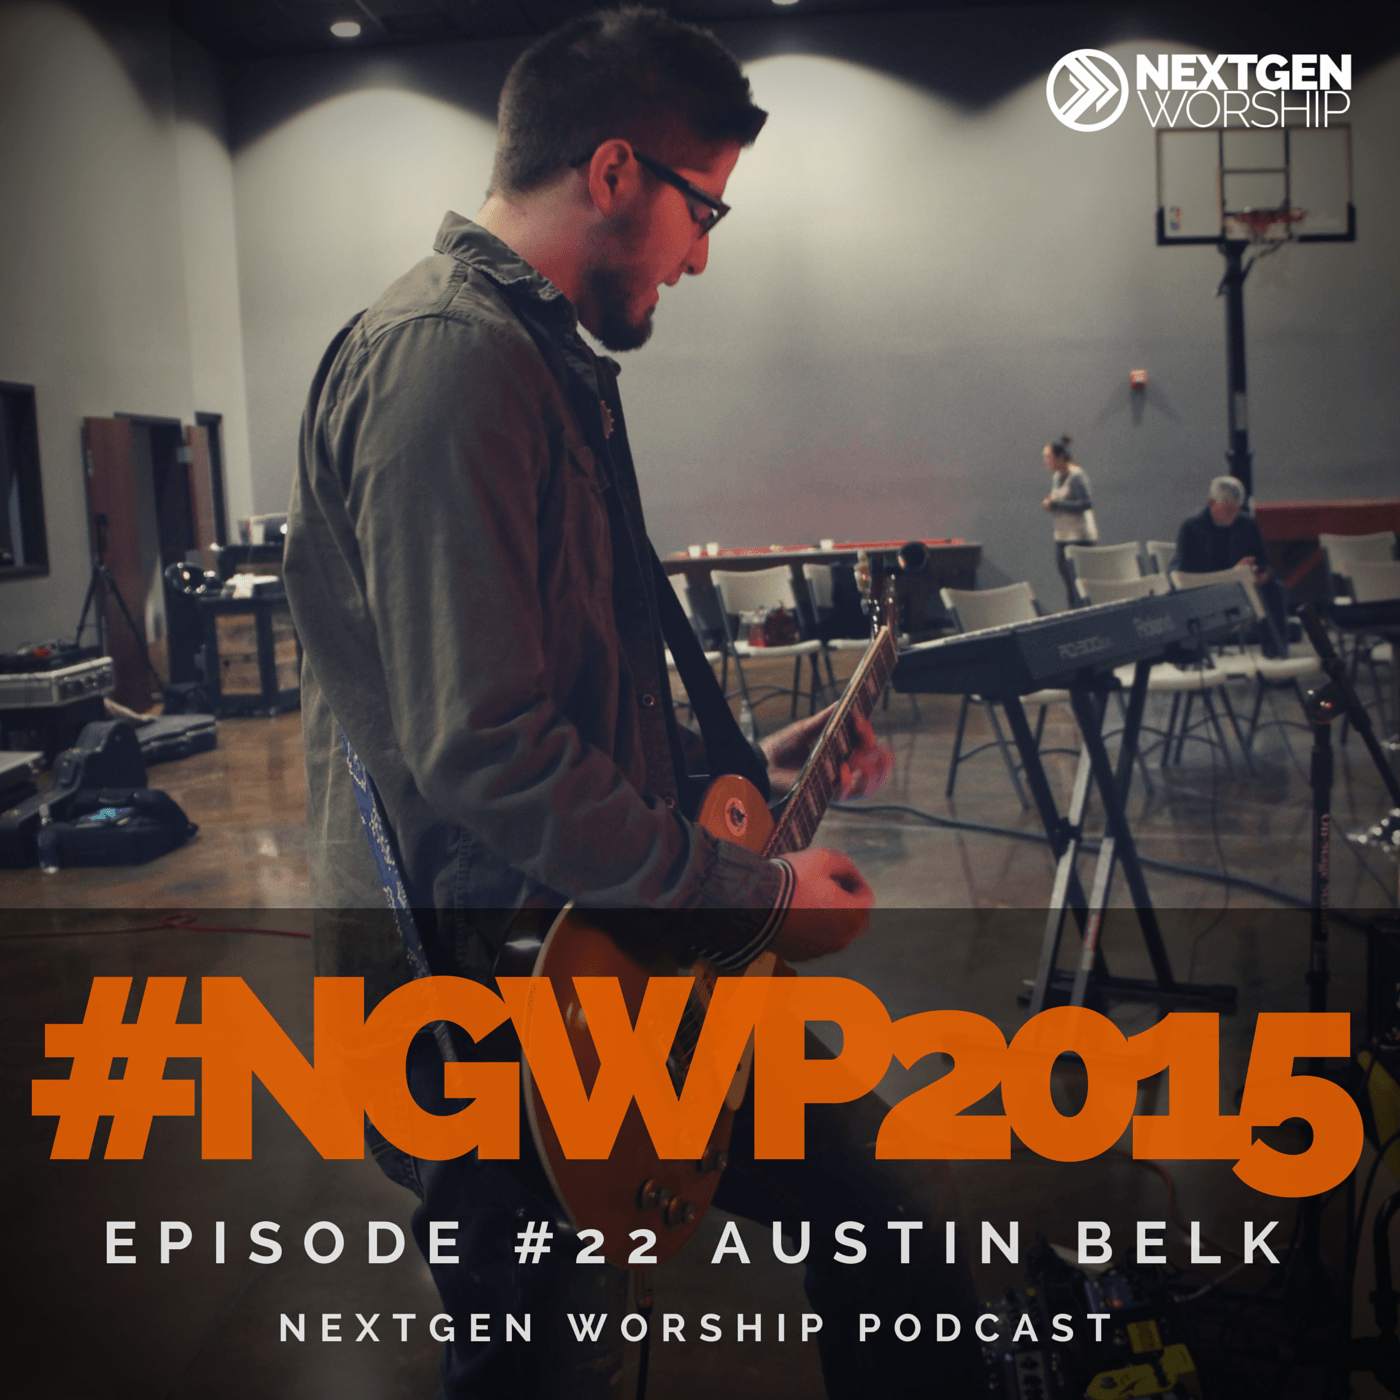 Episode #22 Austin Belk Nextgen Worship Podcast